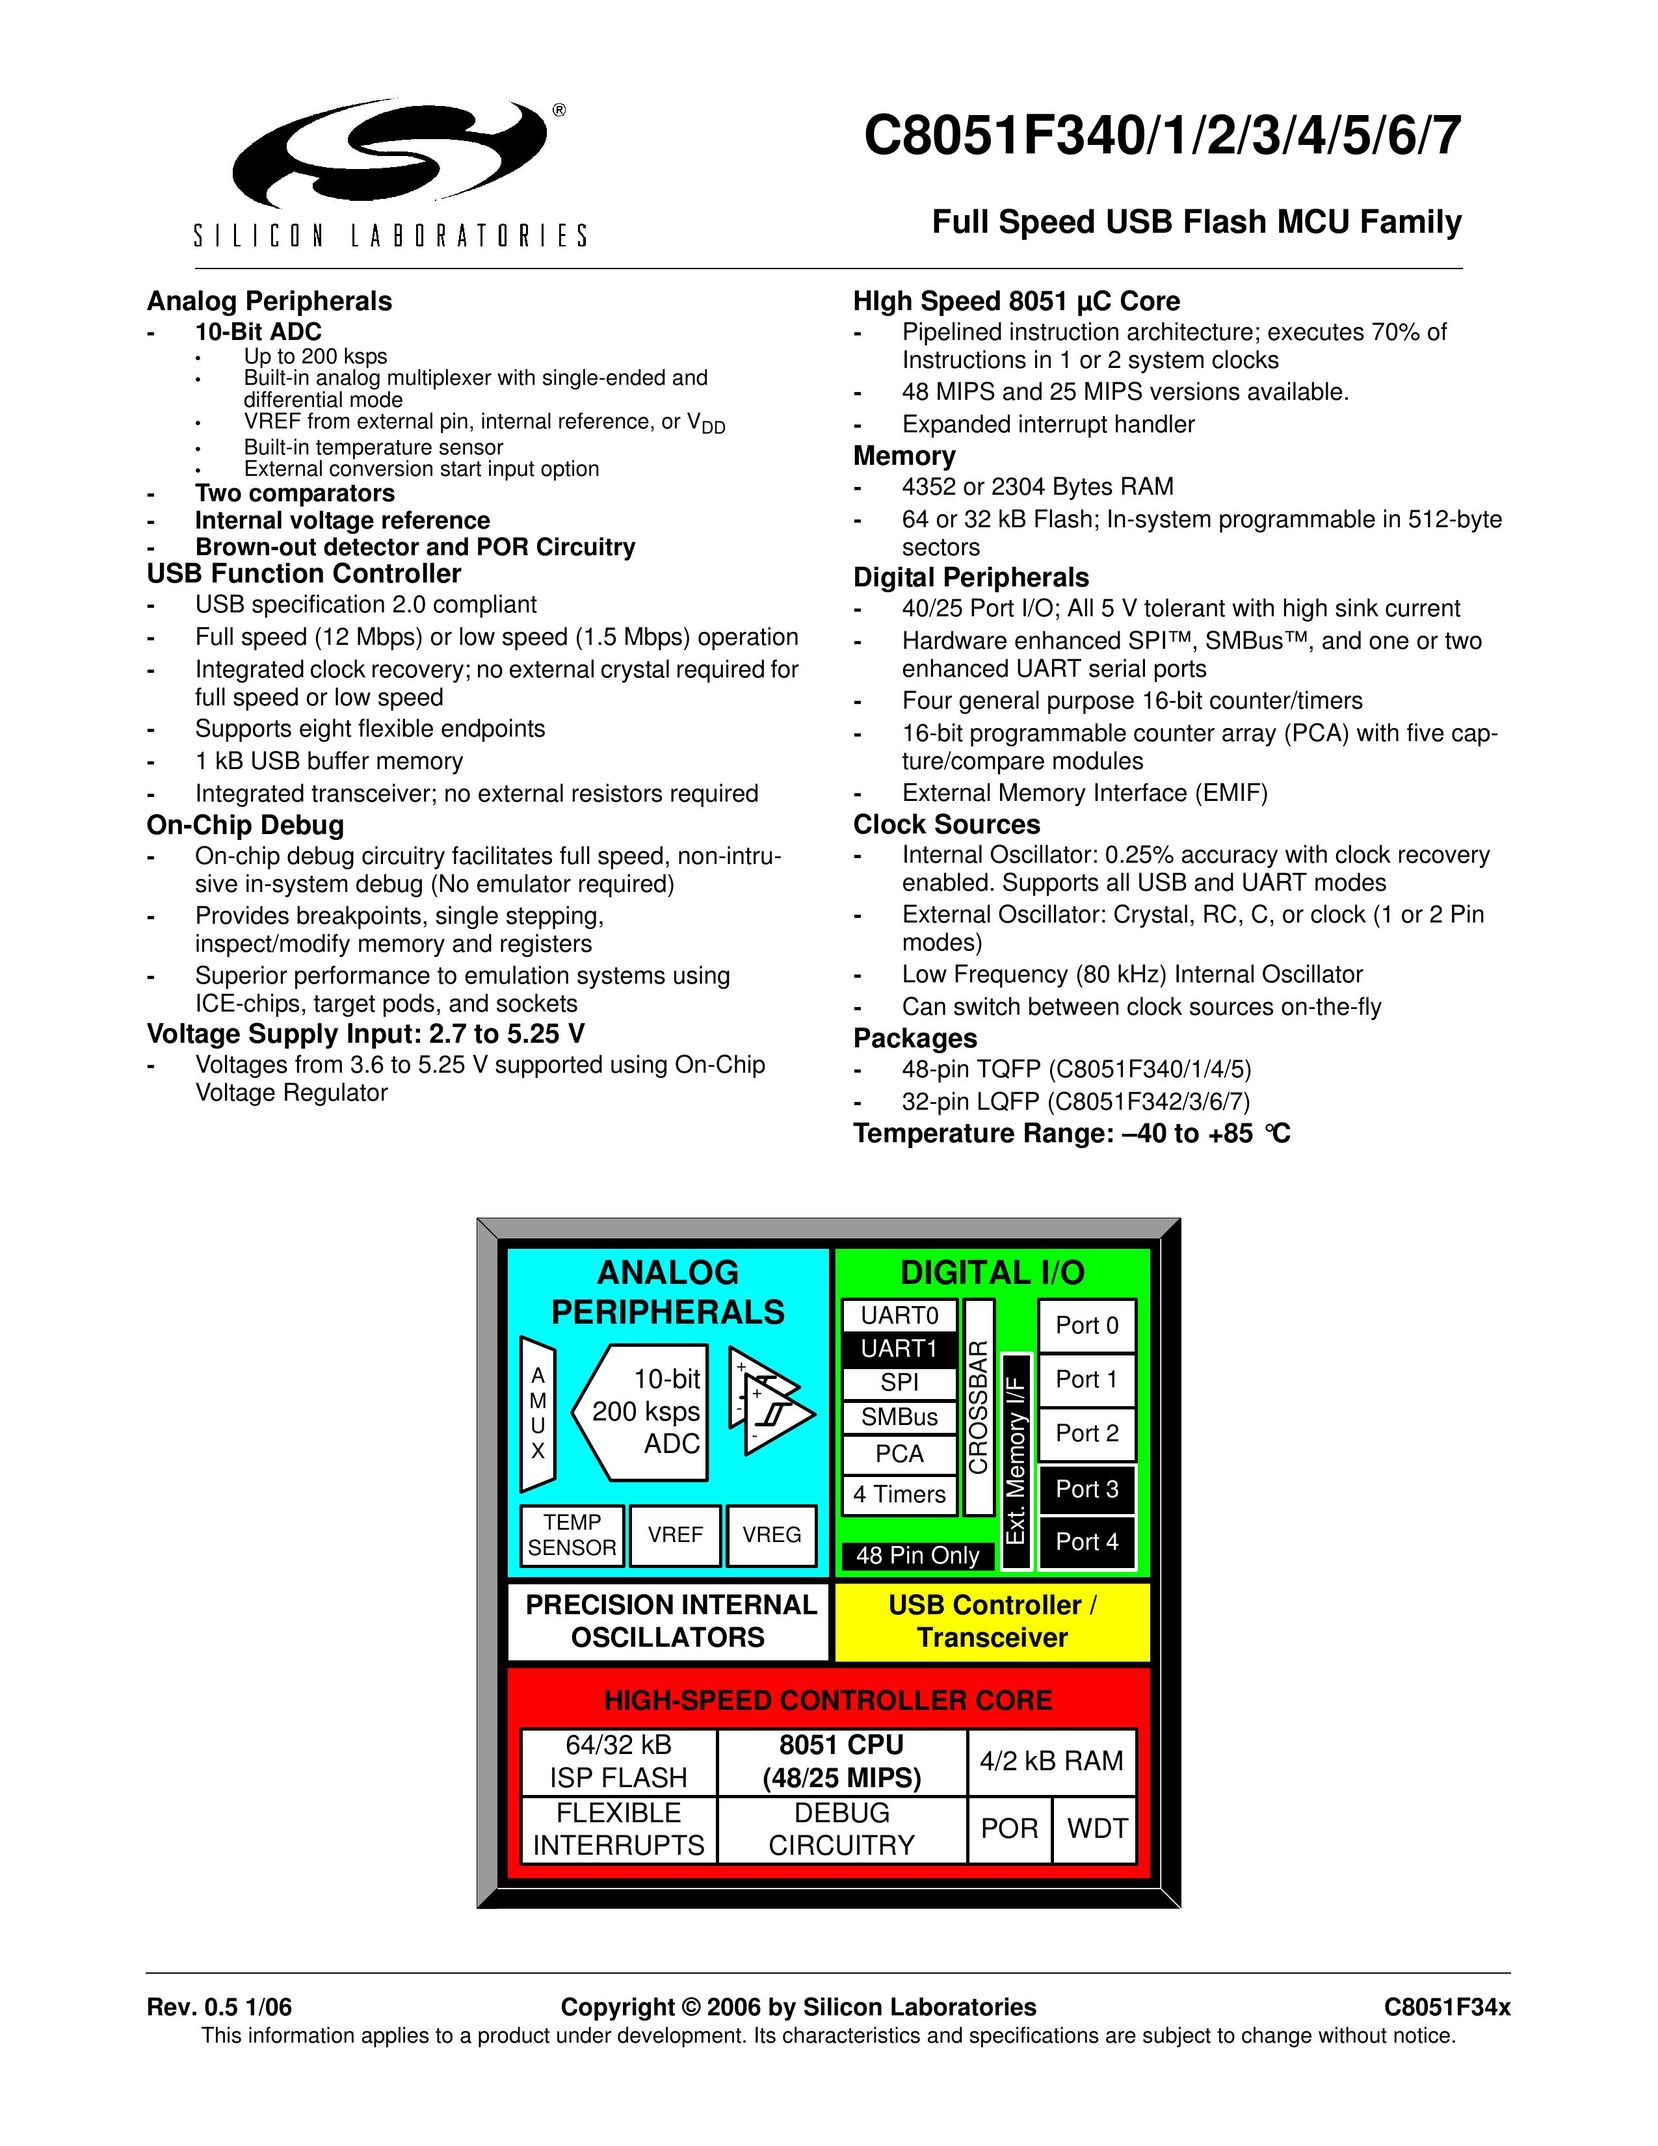 Silicon Laboratories C8051F342 Two-Way Radio User Manual